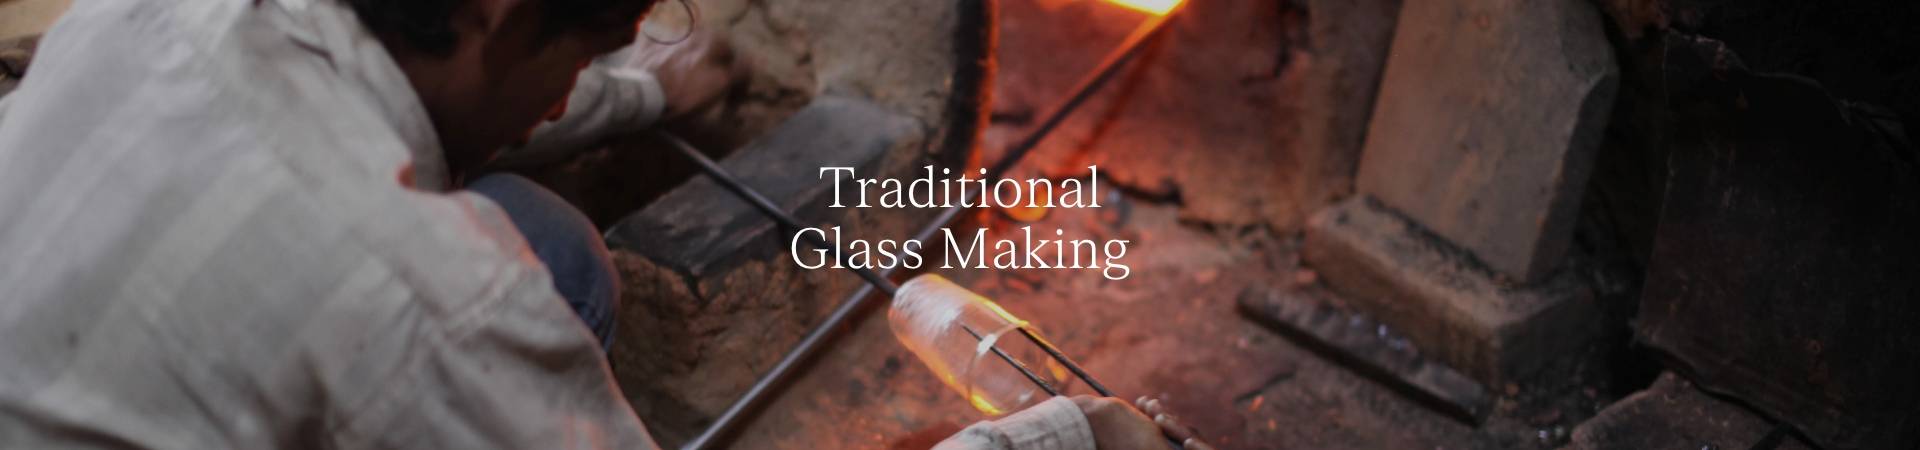 Traditional Glass Making.jpg